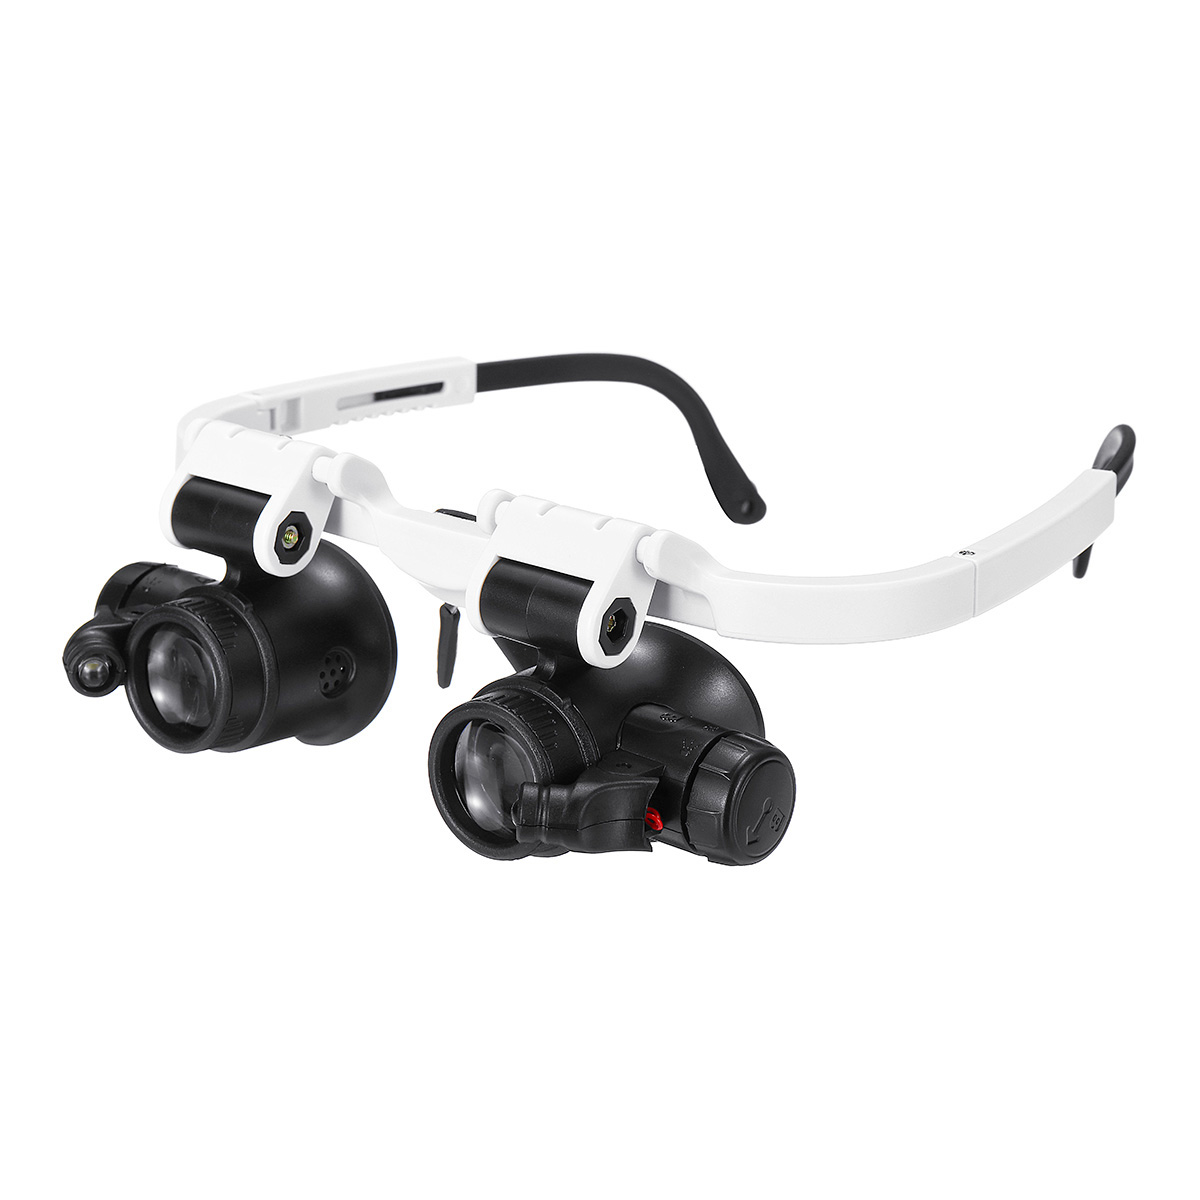 23X-Binocular-Eyepiece-Magnifier-Magnifying-Glasses-Jeweler-Watch-Repair-Kit-Adjustable-LED-Light-1344937